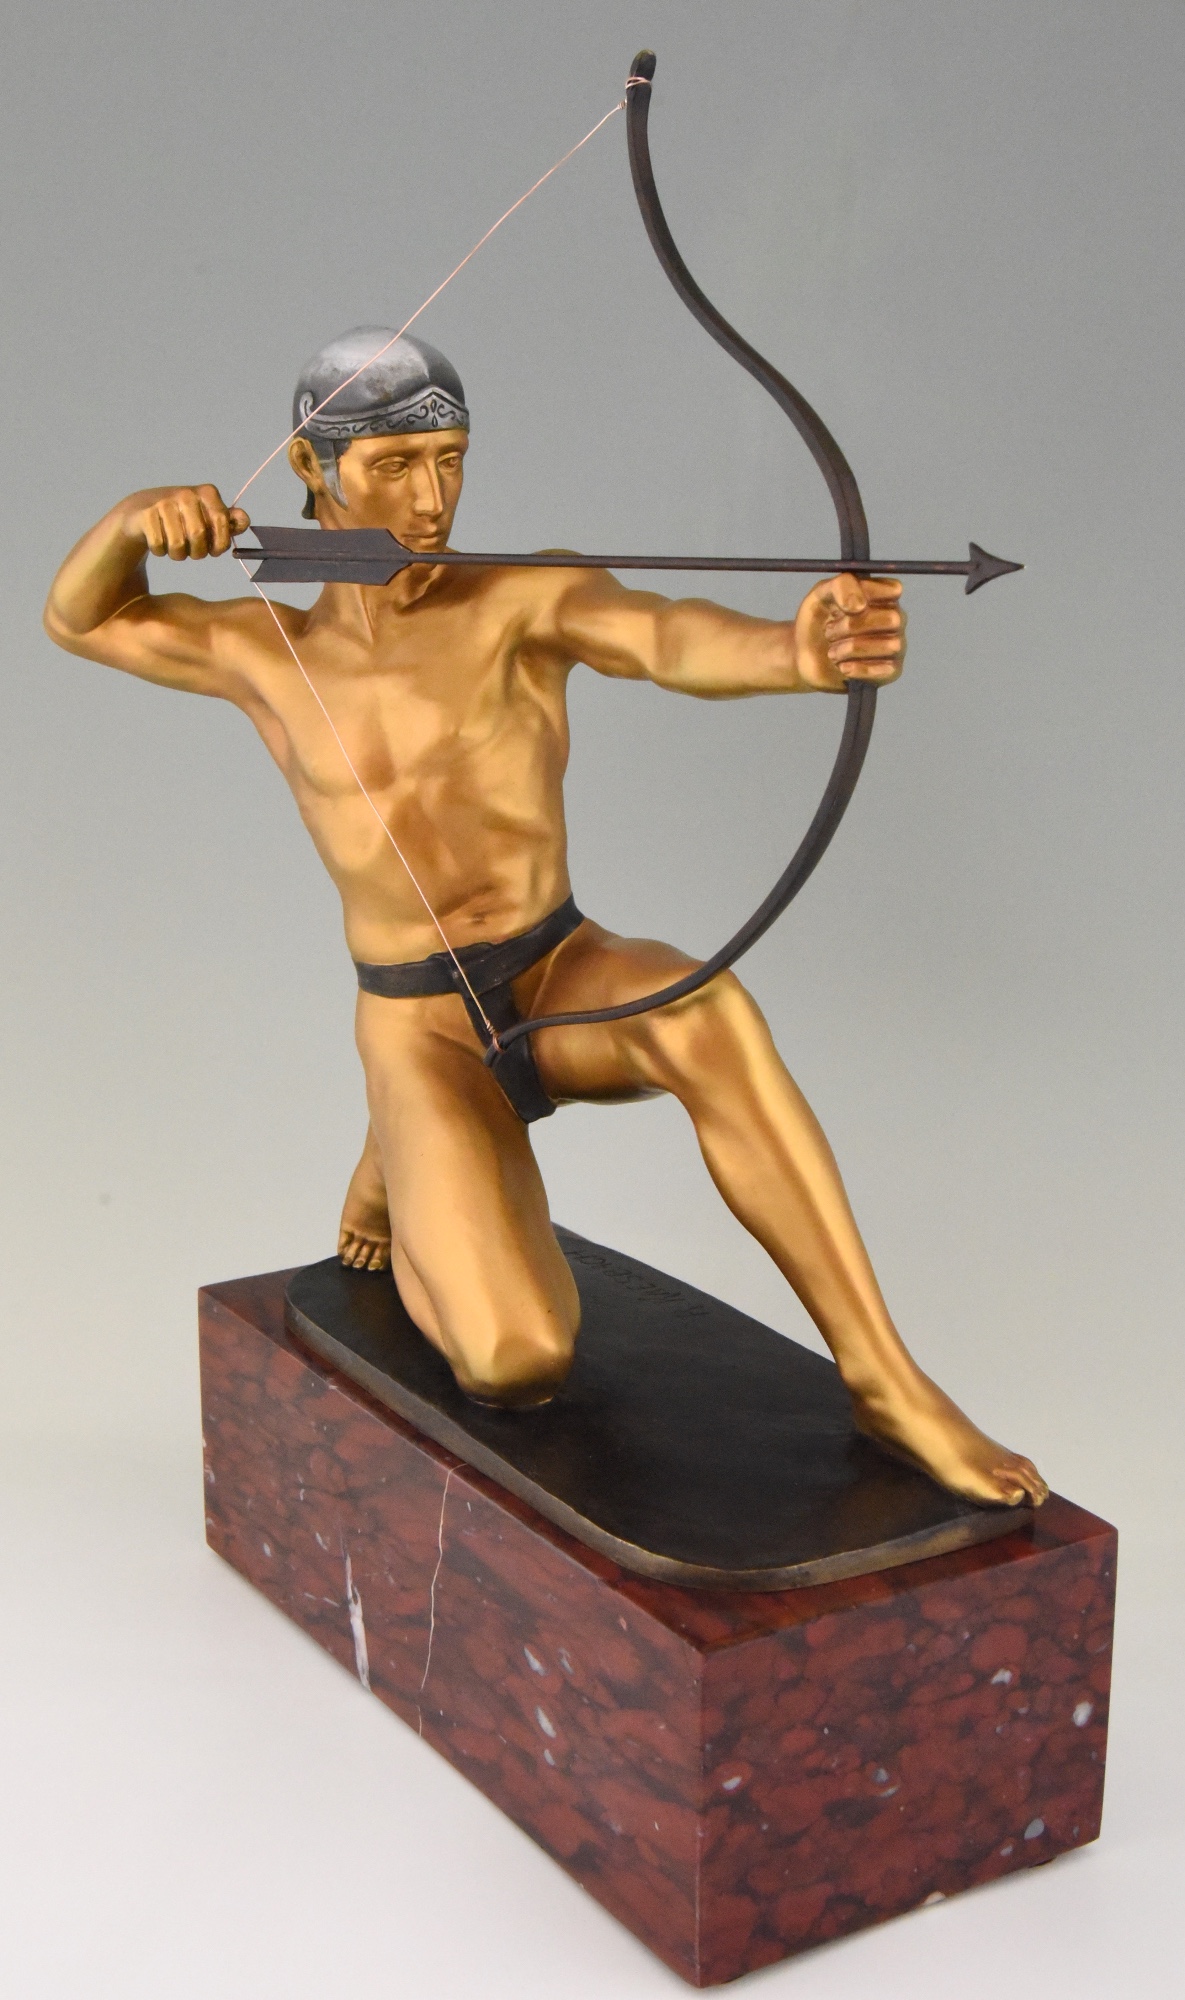 In archer nudity 'Archer': Love